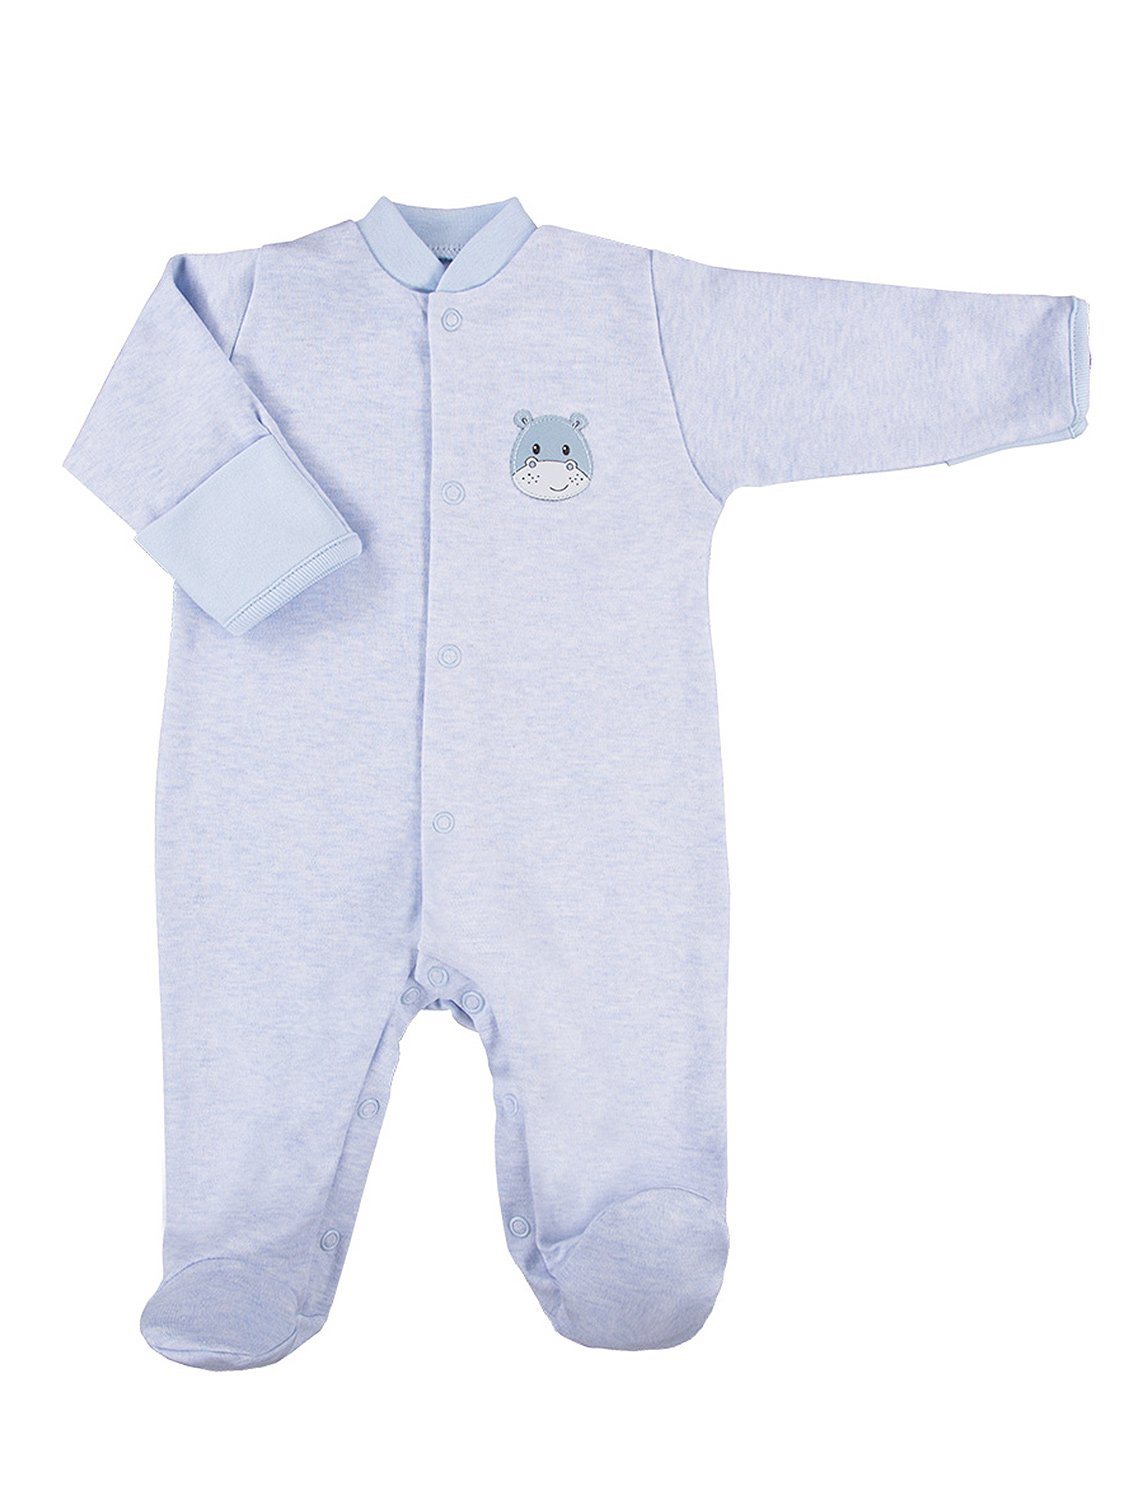 Early Baby Footed Sleepsuit, Cute Hippo Design - Blue Sleepsuit / Babygrow EEVI 5-8lb 